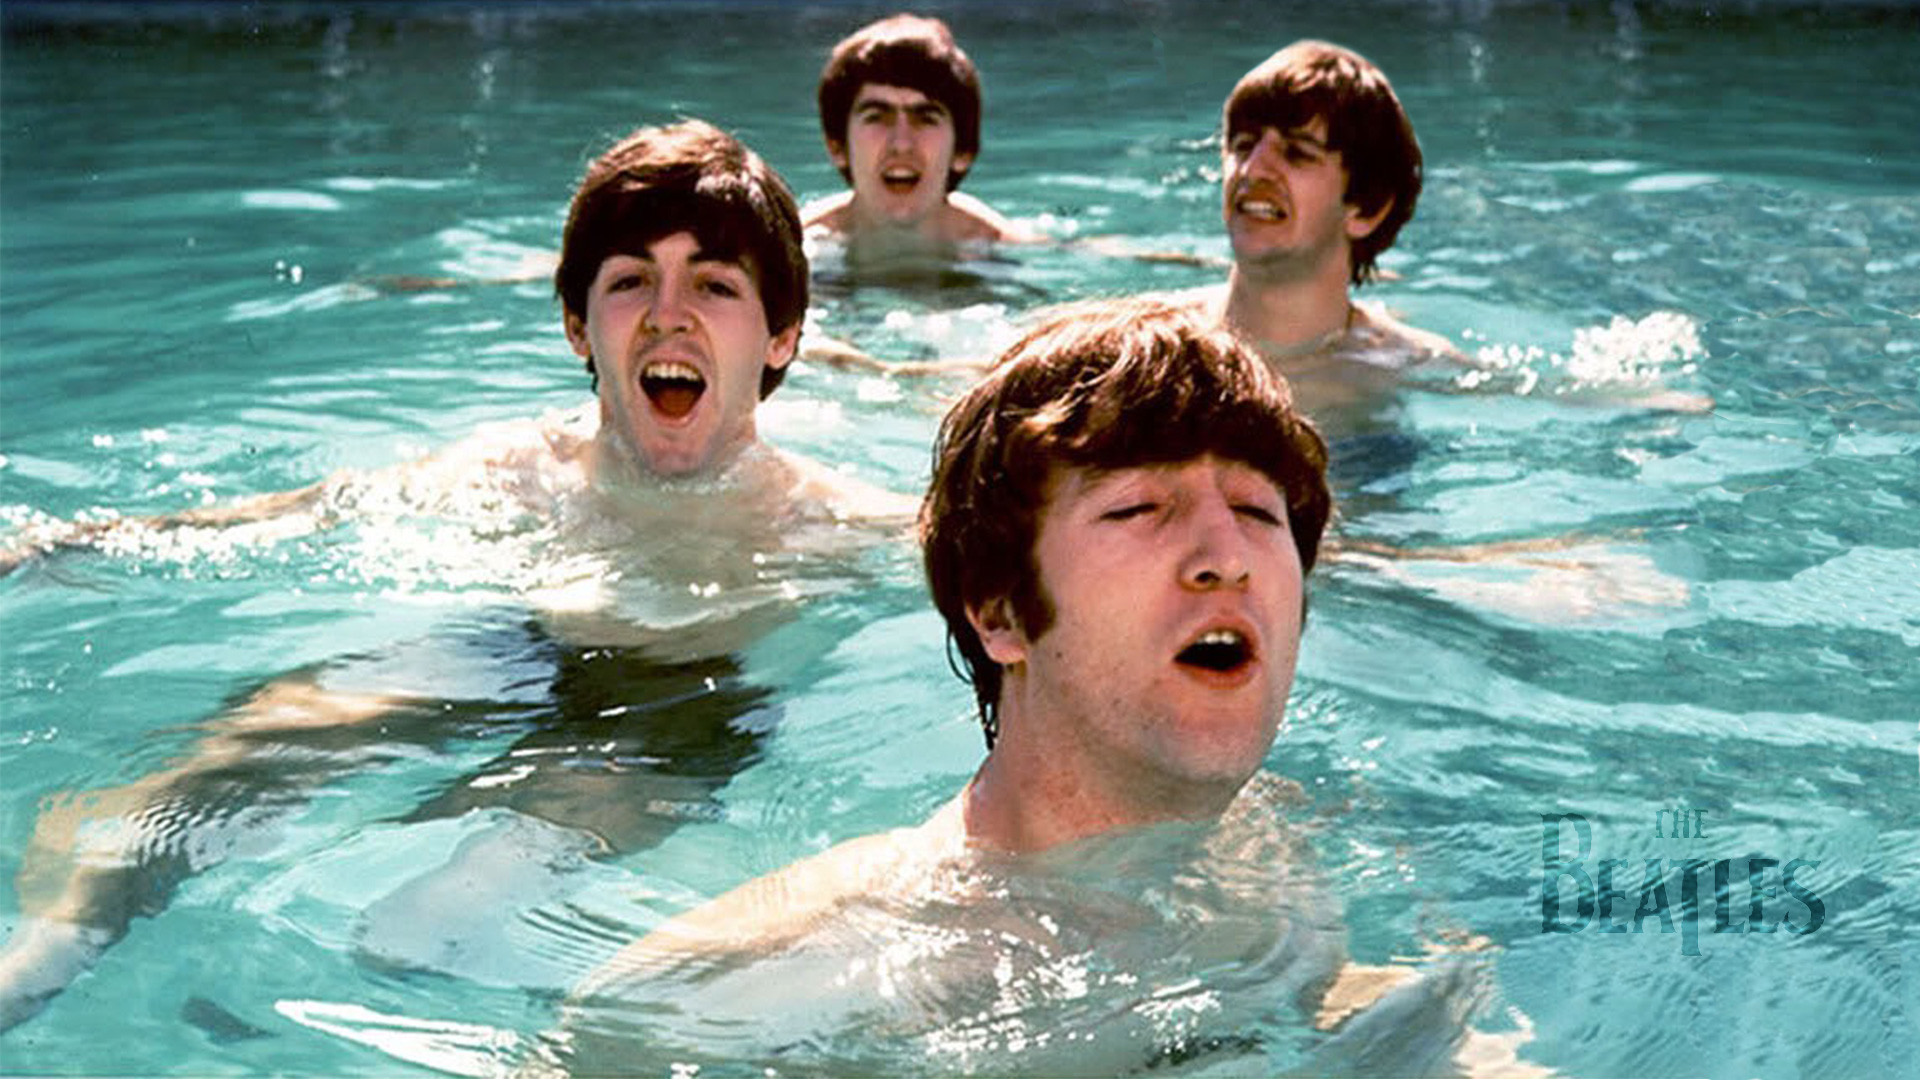 1920x1080 The Beatles